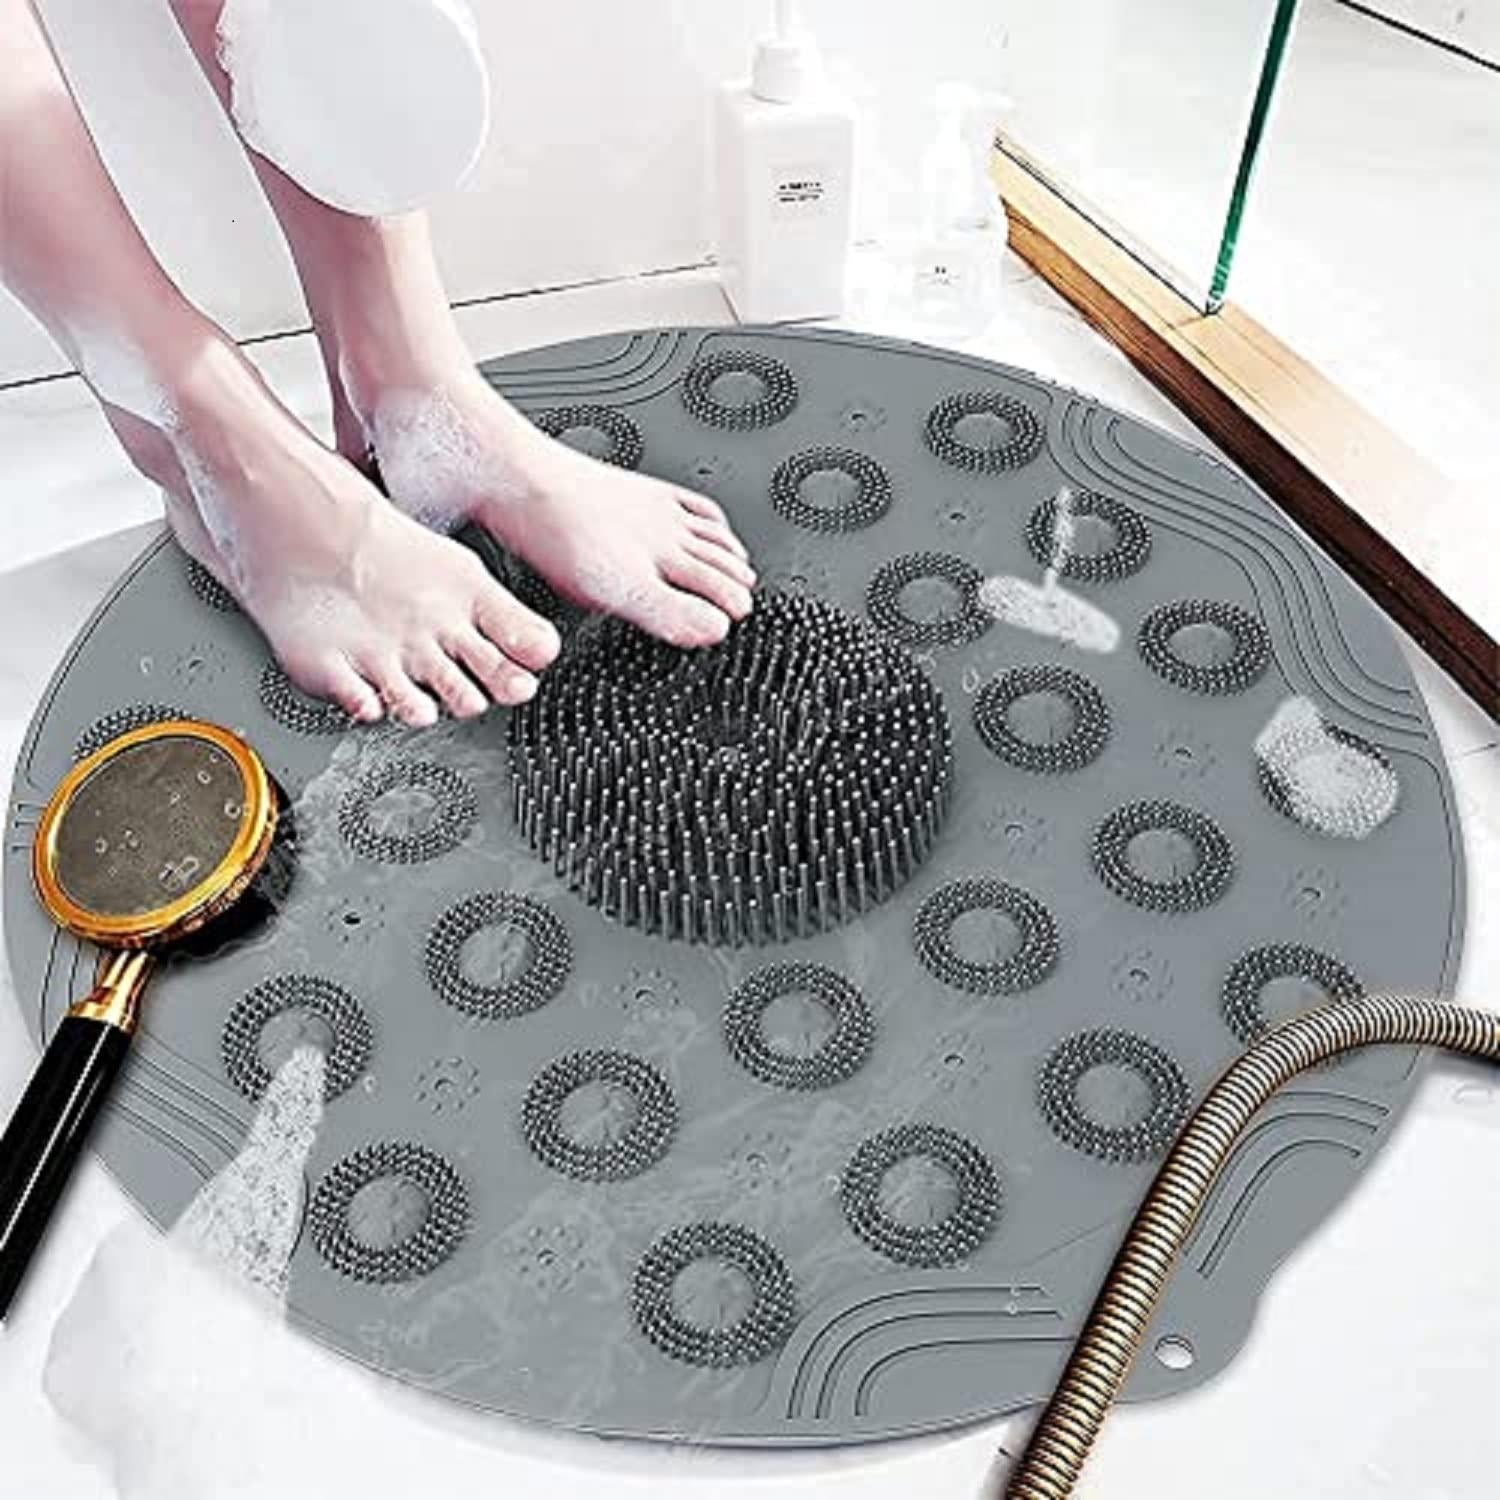 Anti-Slip Bathroom Mat With Foot Scrubber (BUY 1 GET 1 FREE)🔥